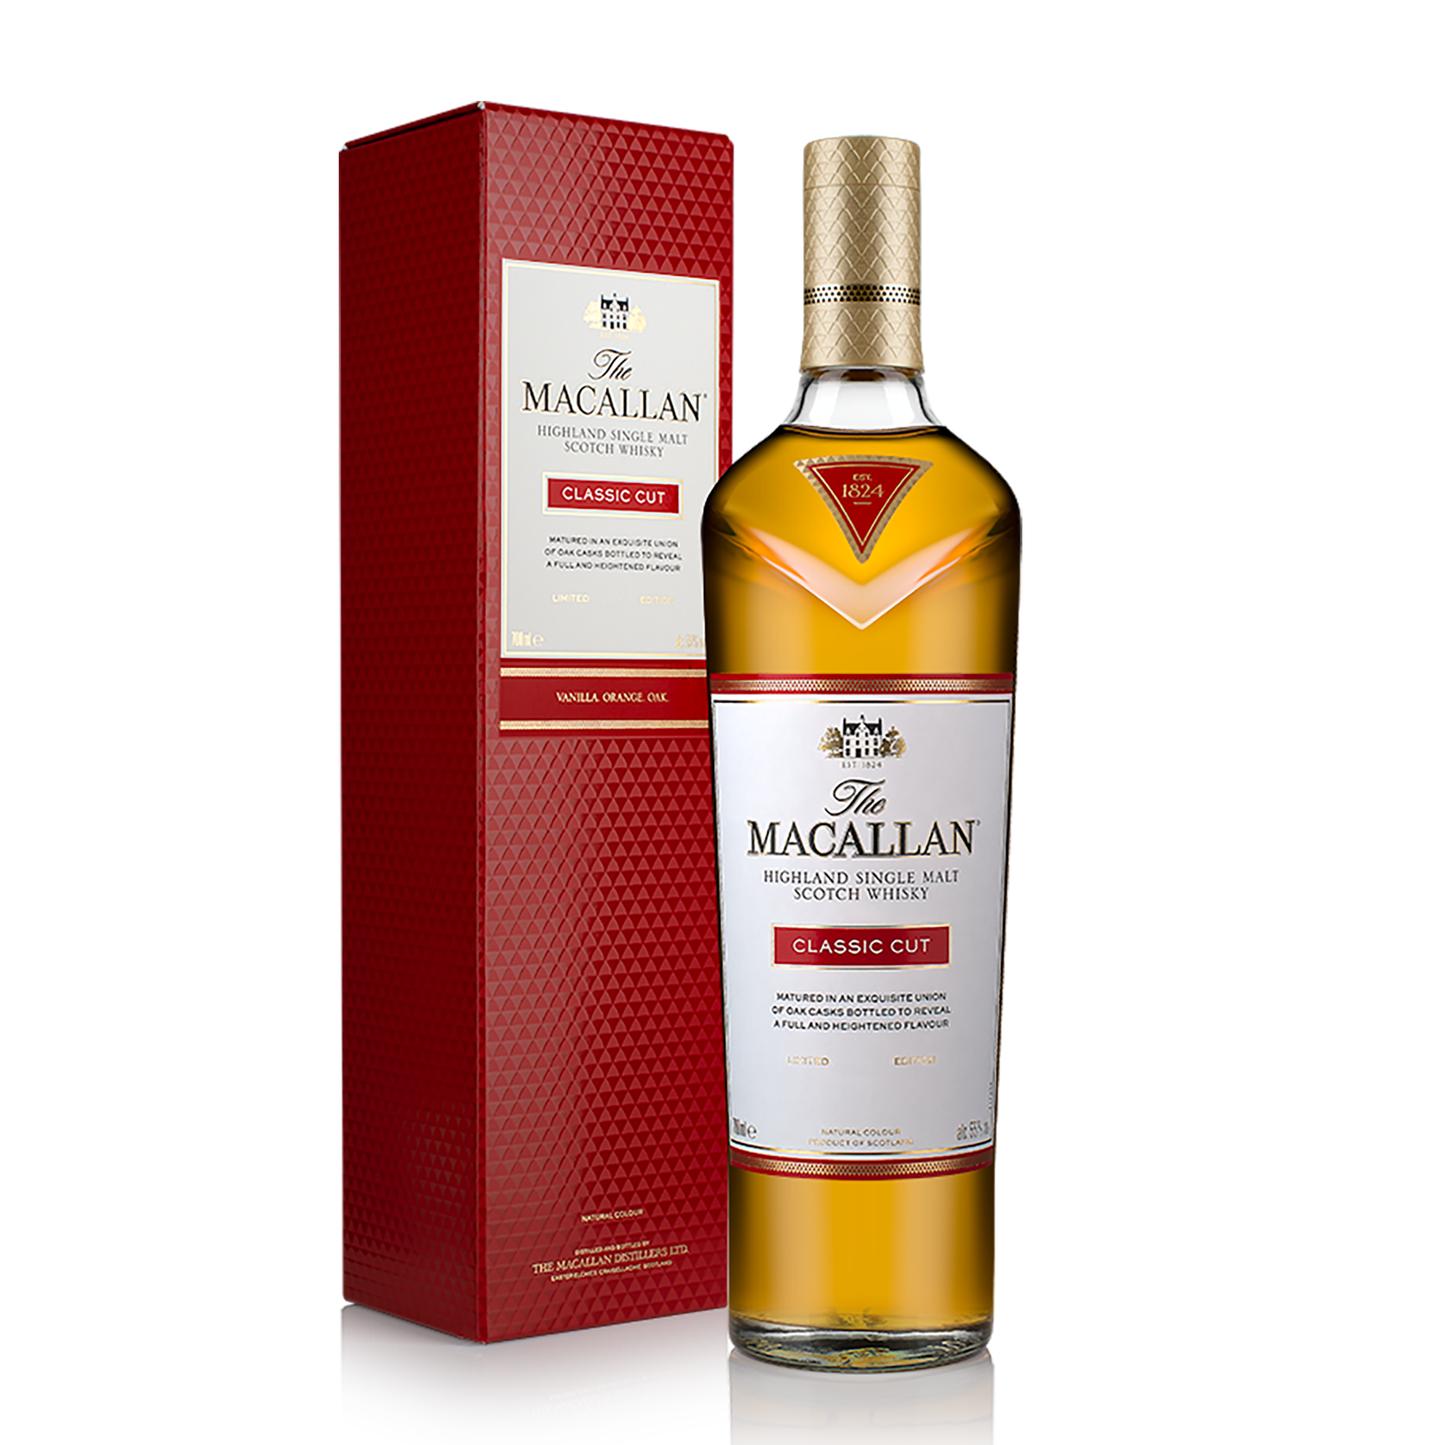 The Macallan Classic Cut Cask Strength Single Malt Scotch Whisky 700ml (2018 Edition)